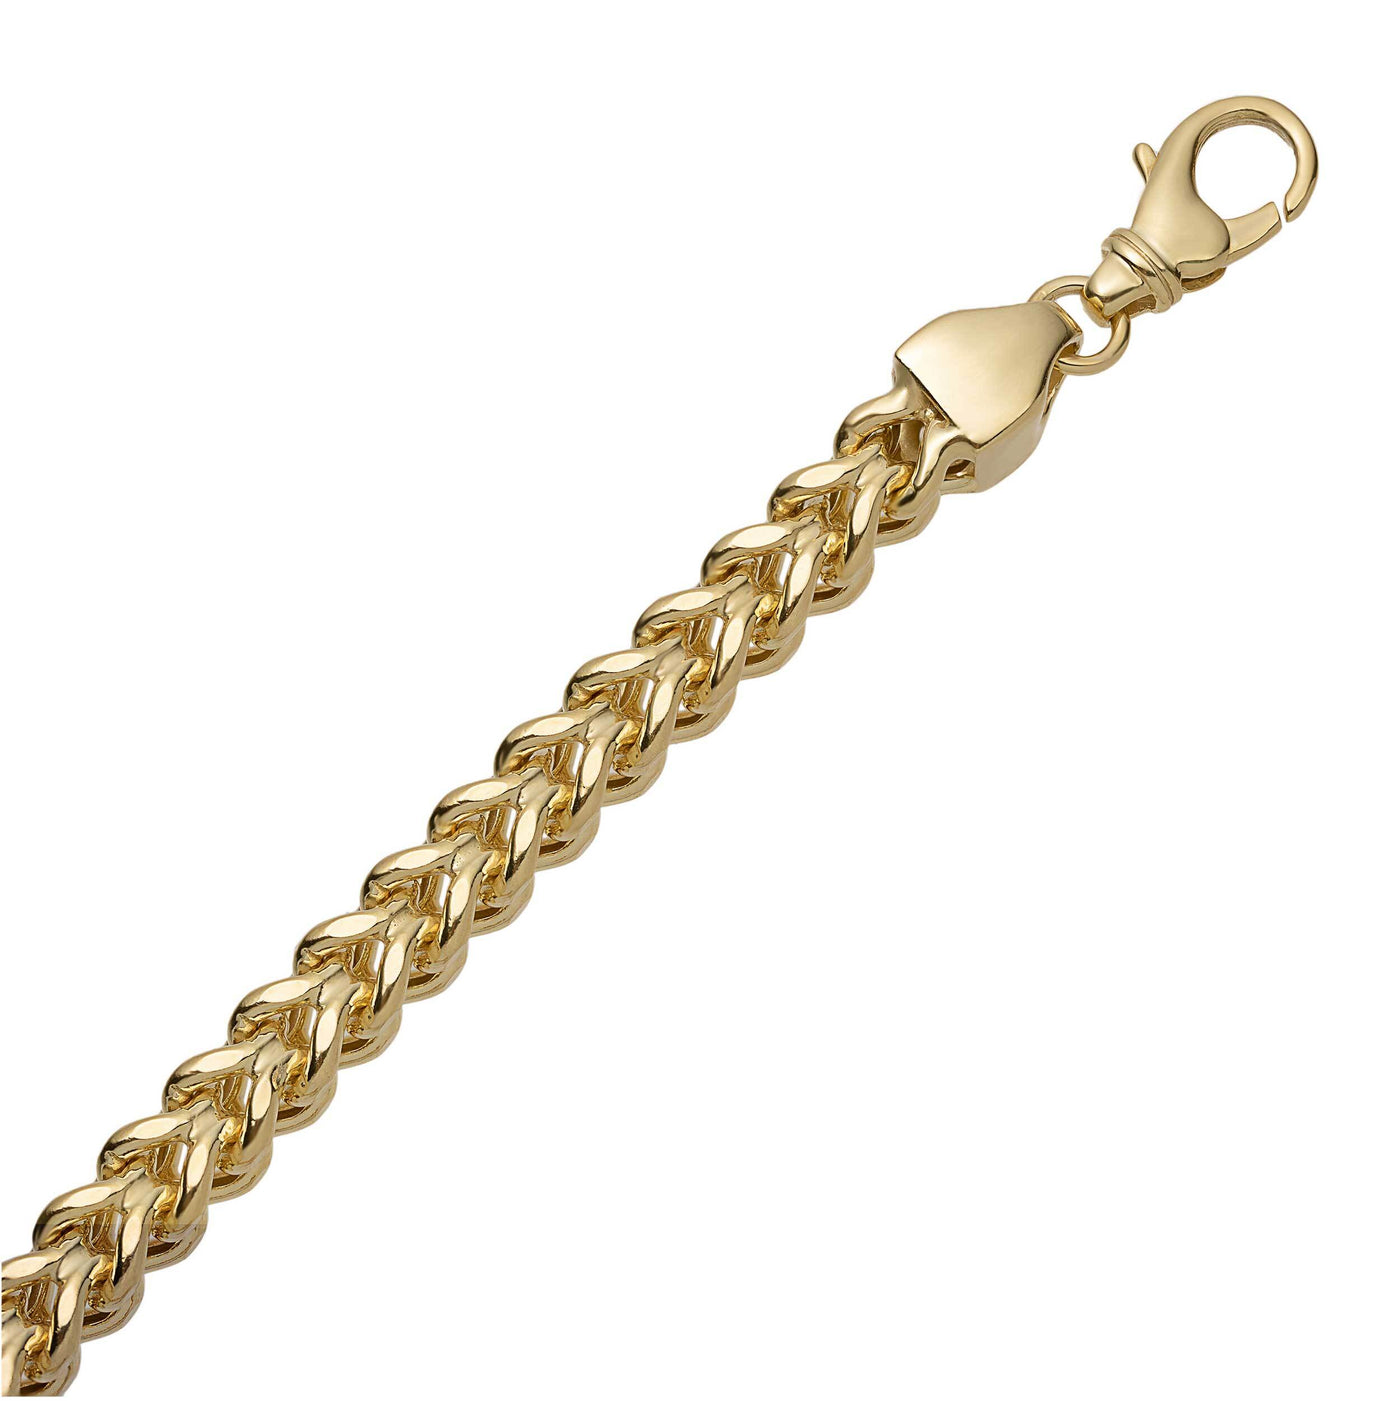 Franco Link Bracelet 14K Yellow Gold - Hollow